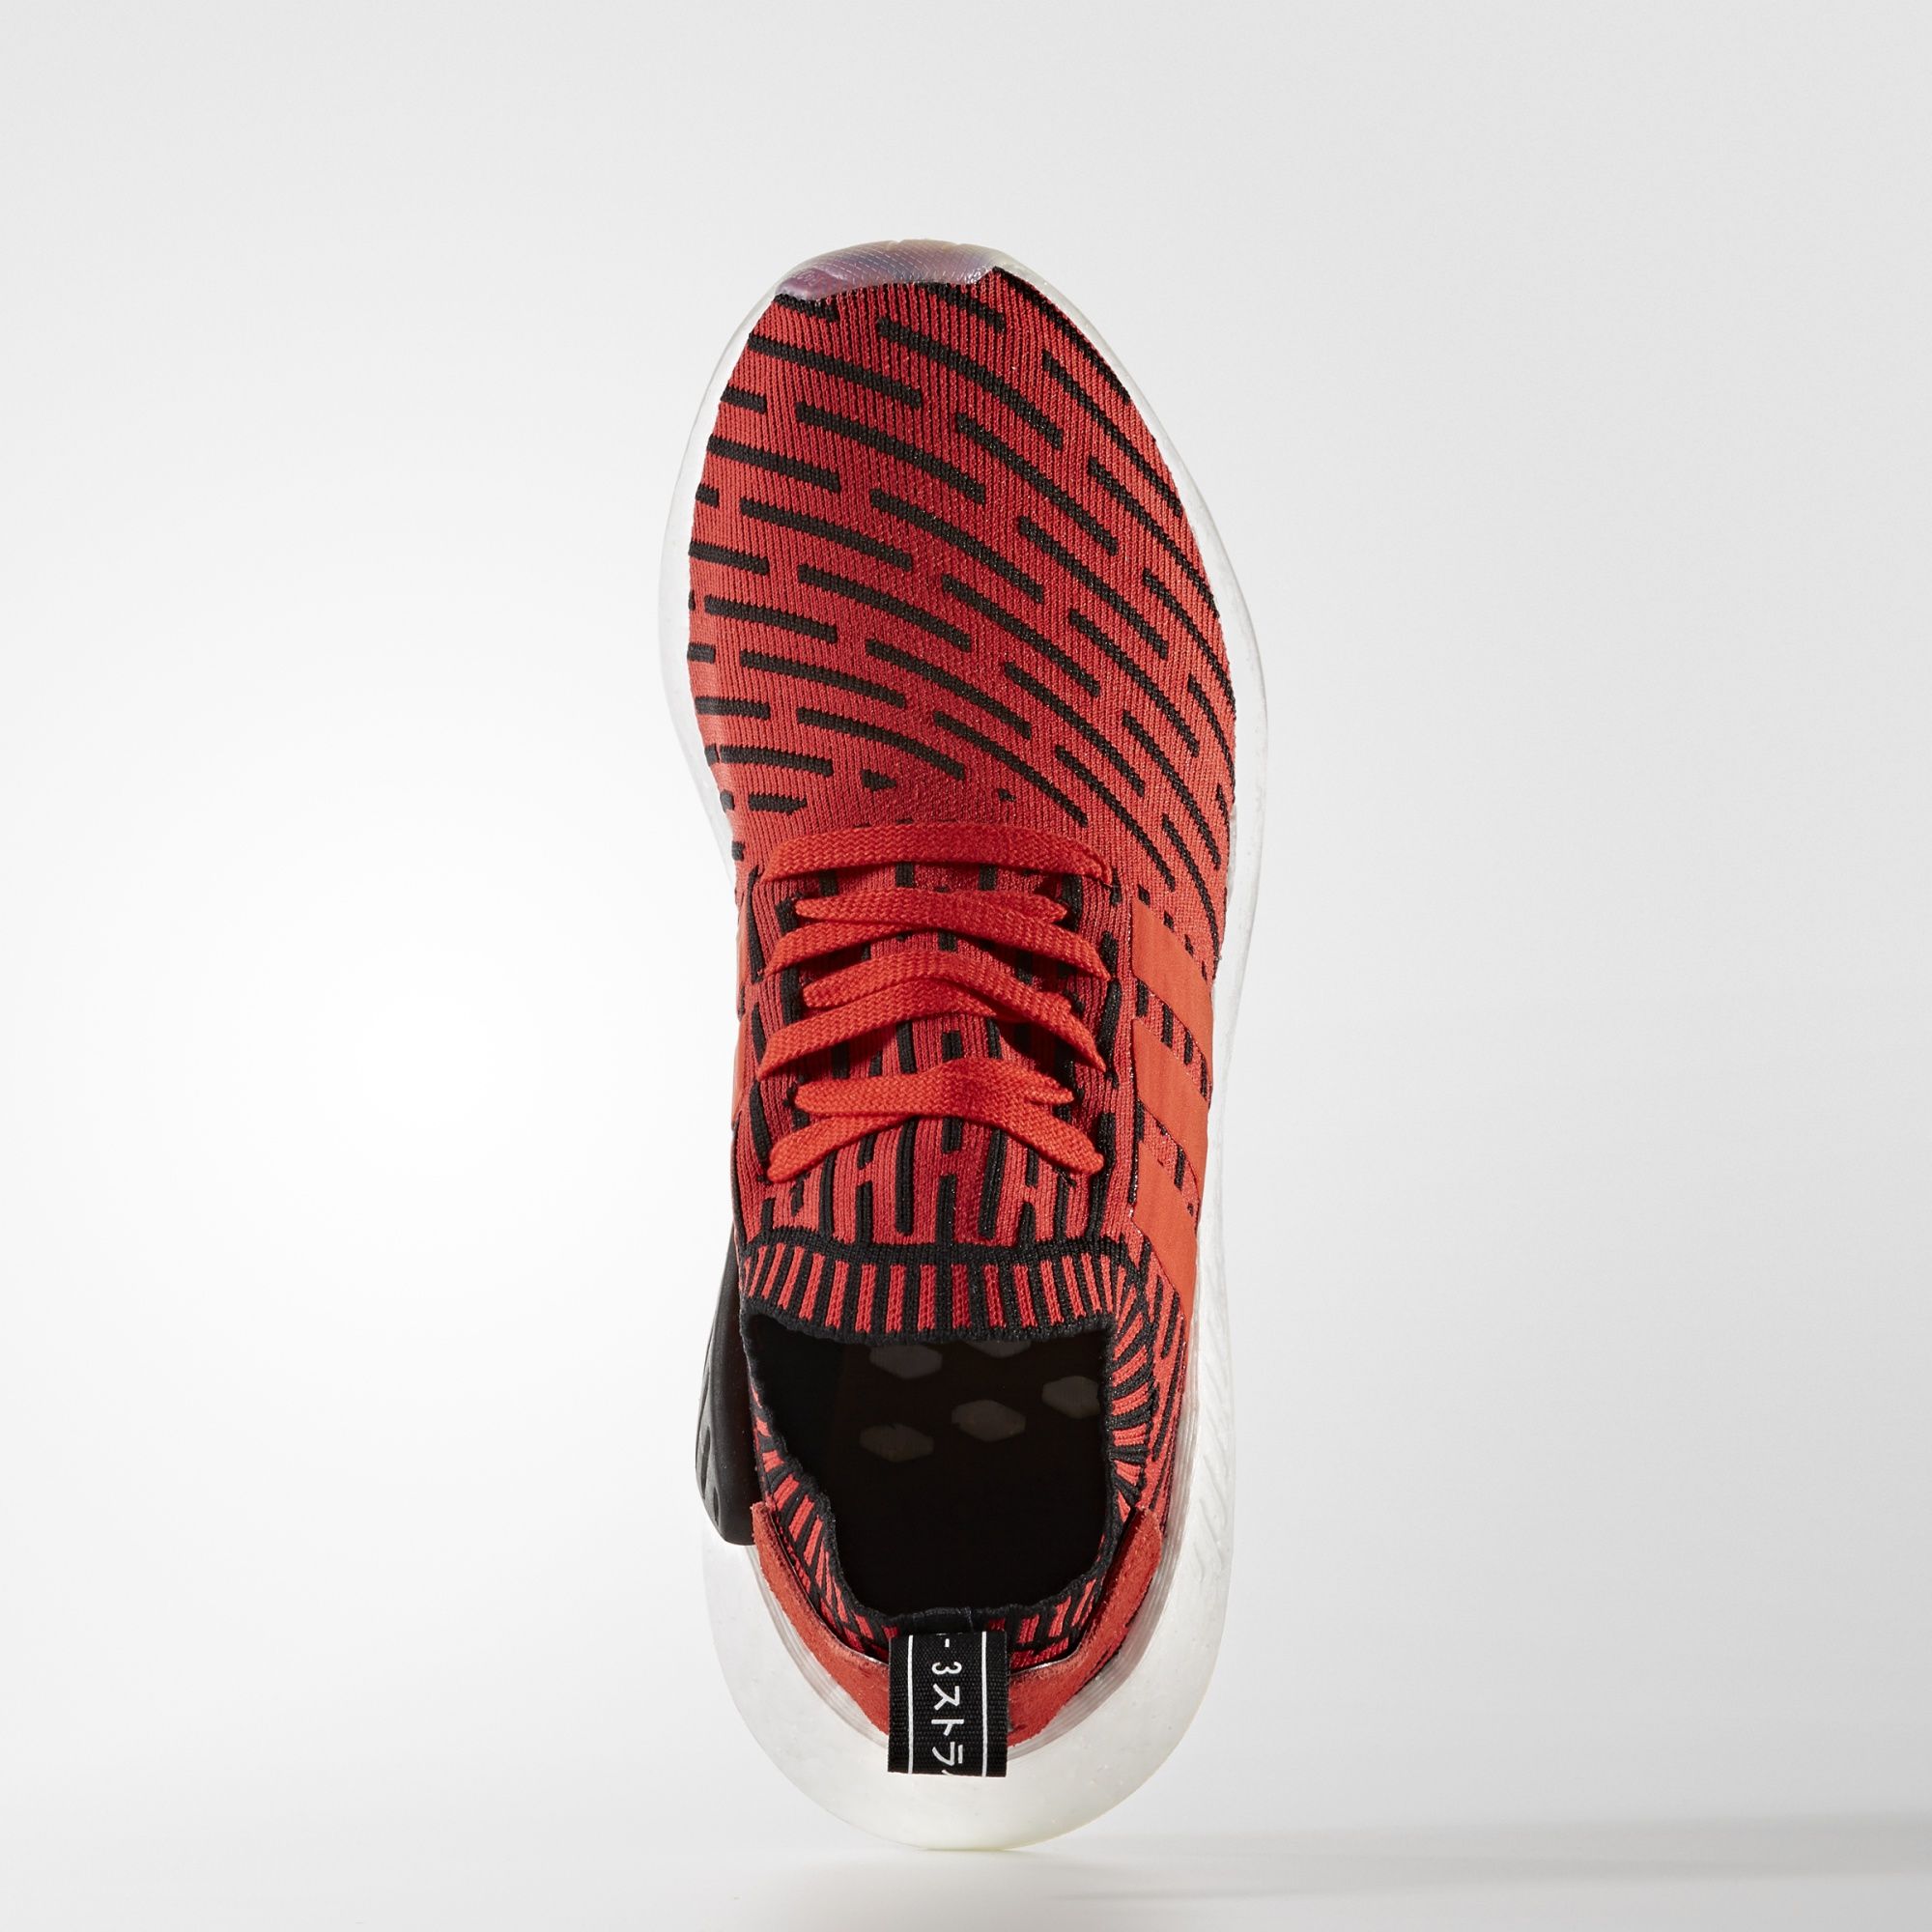 Adidas NMD_R2 Primeknit
Core Red / Footwear White